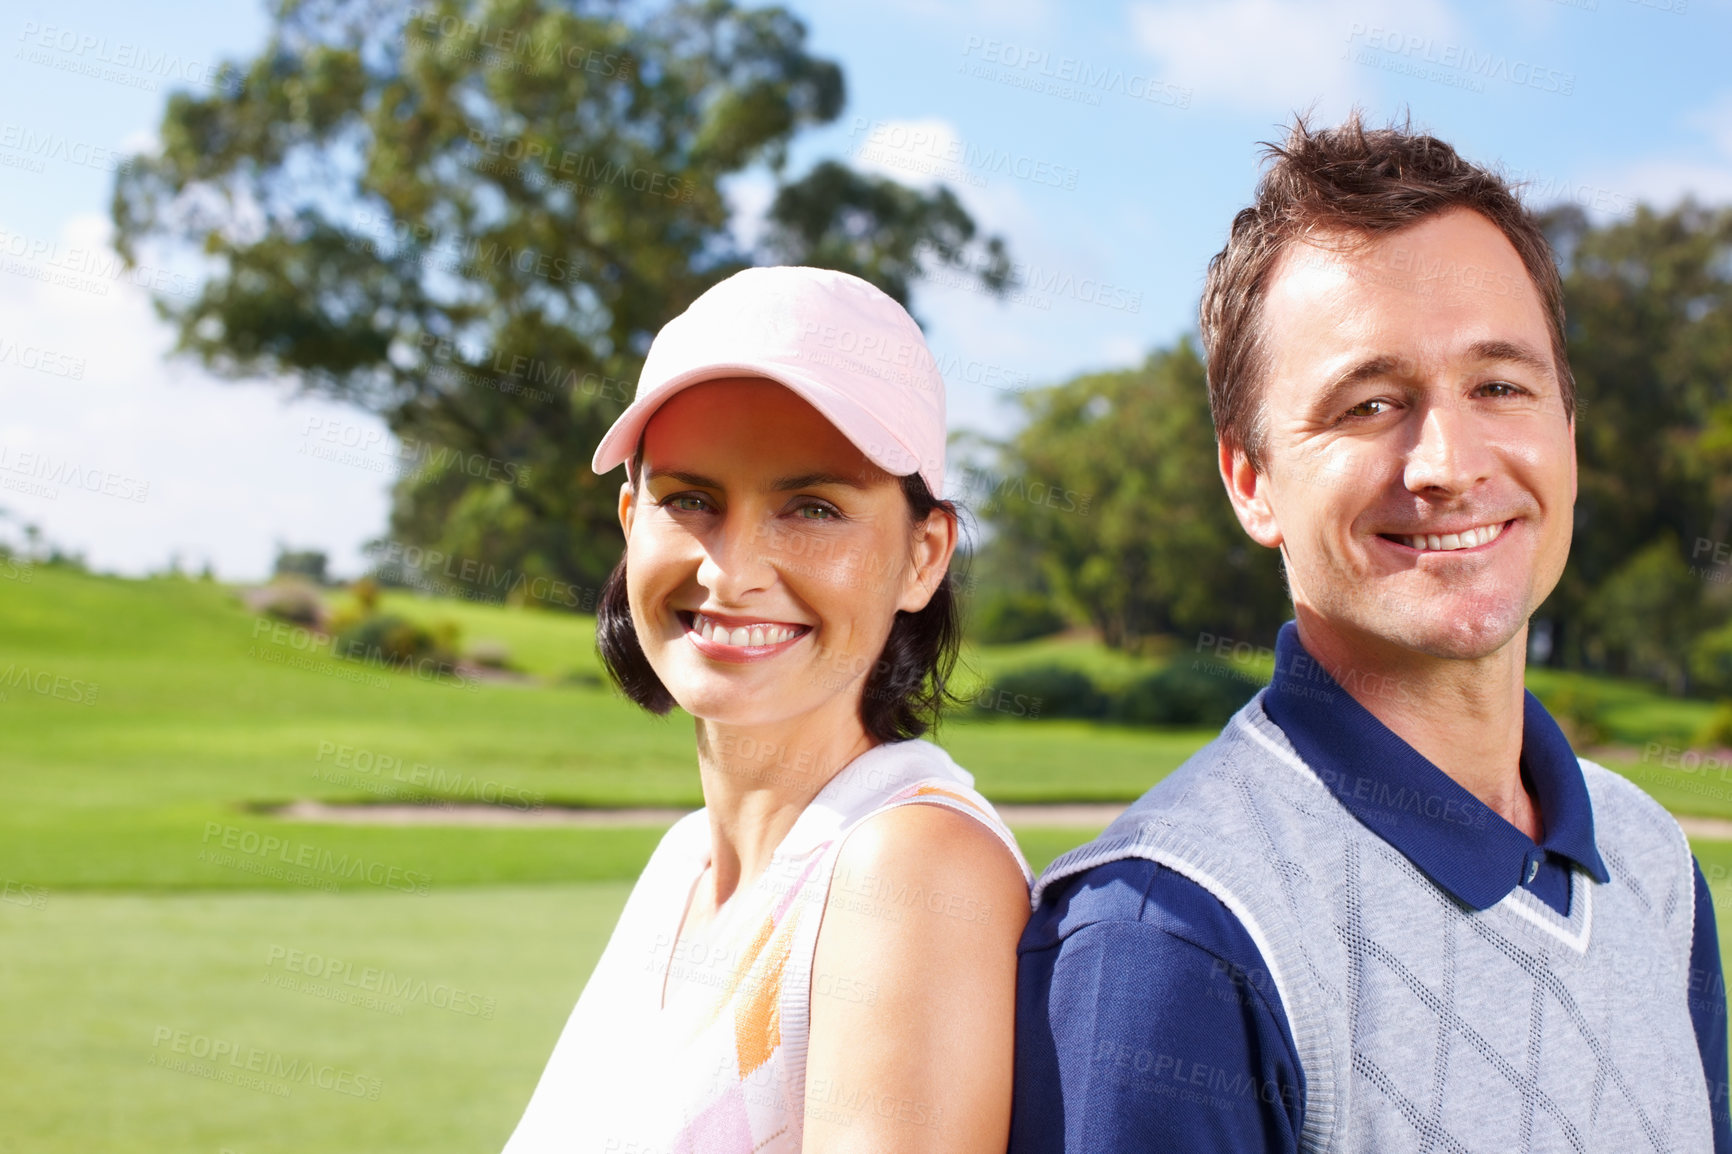 Buy stock photo Closeup of golfing couple giving you a cute smile